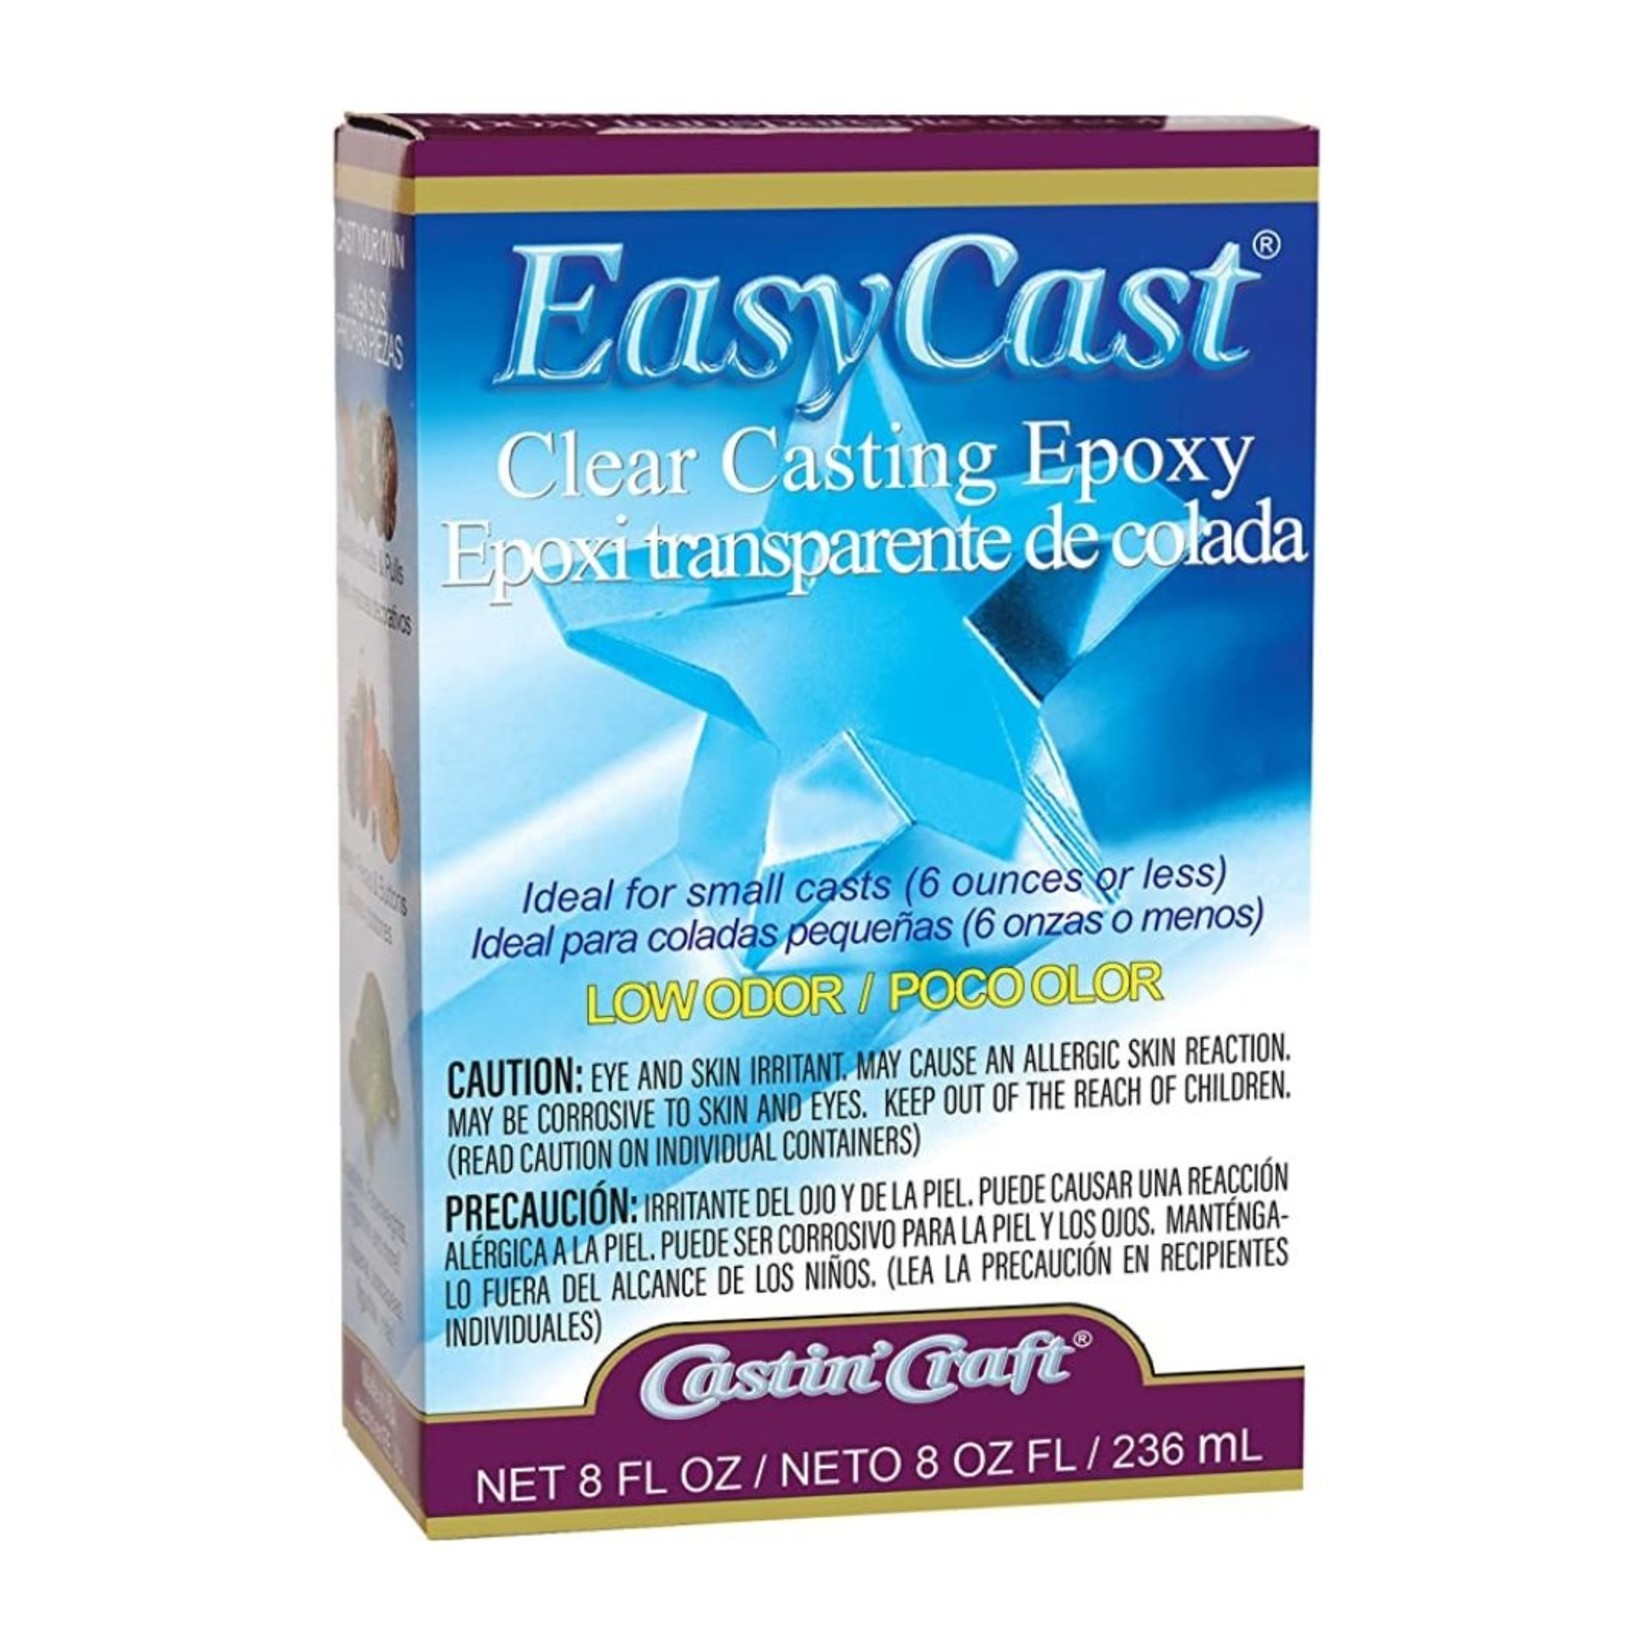 CASTIN' CRAFT CLEAR CASTING EPOXY EASY CAST 8OZ